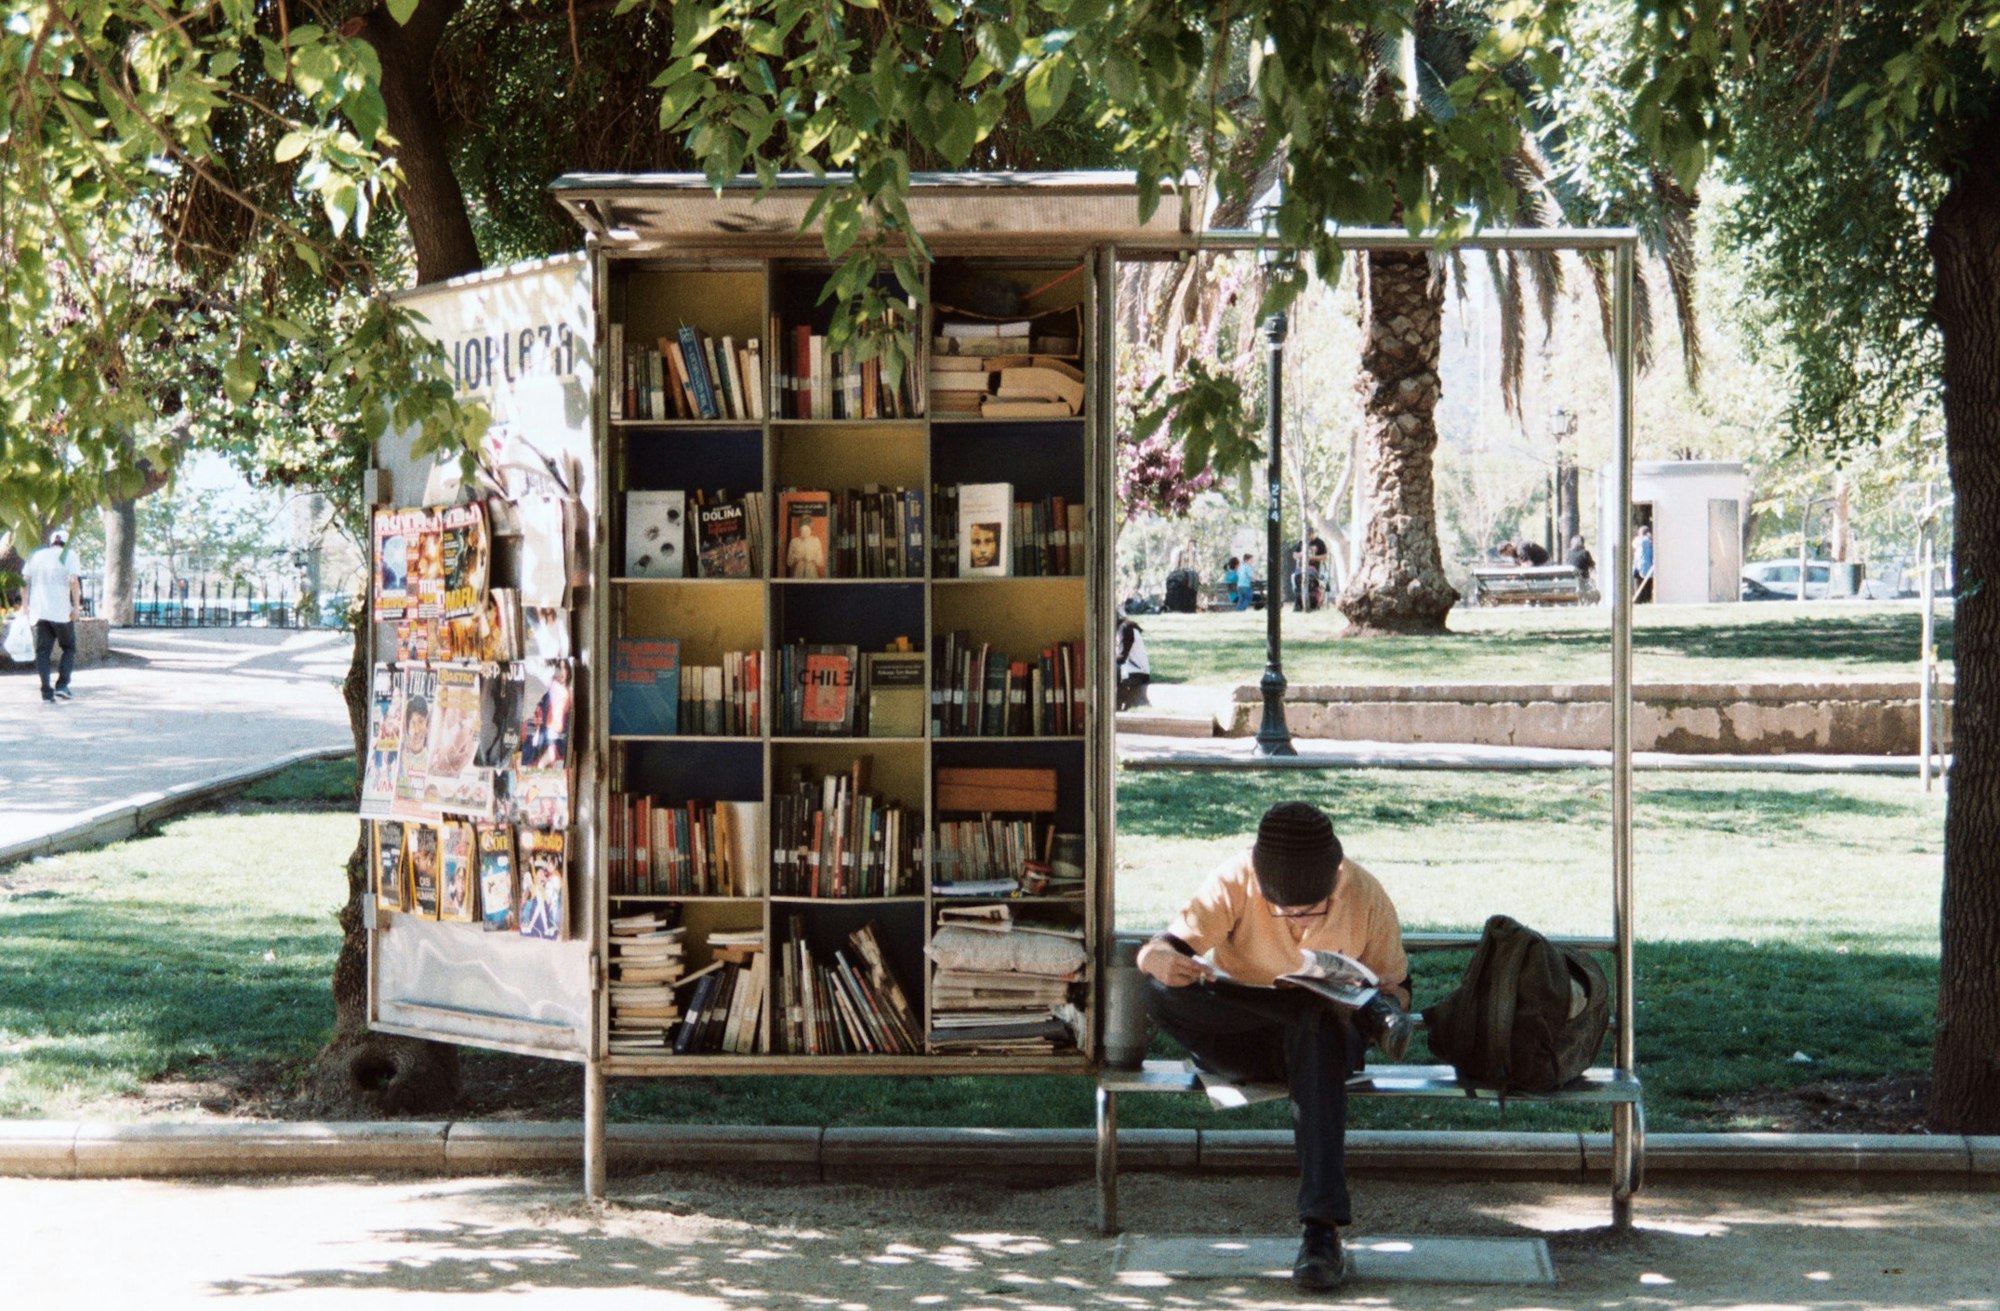 Libreria ambulante
Santiago de Chile